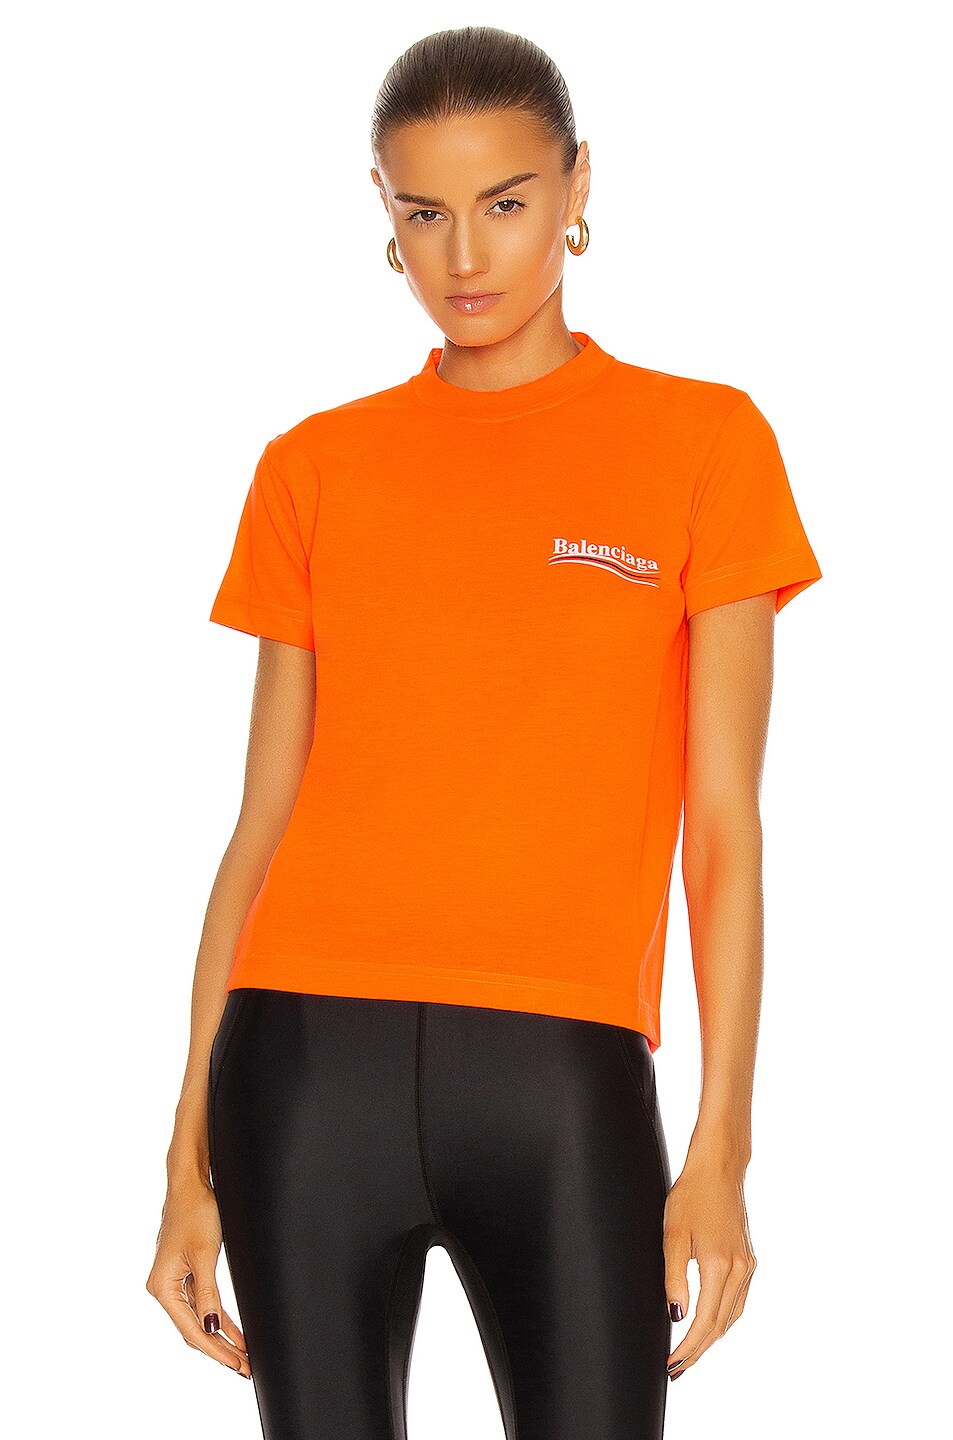 Balenciaga Small Fit T Shirt in Fluo Orange & White | FWRD